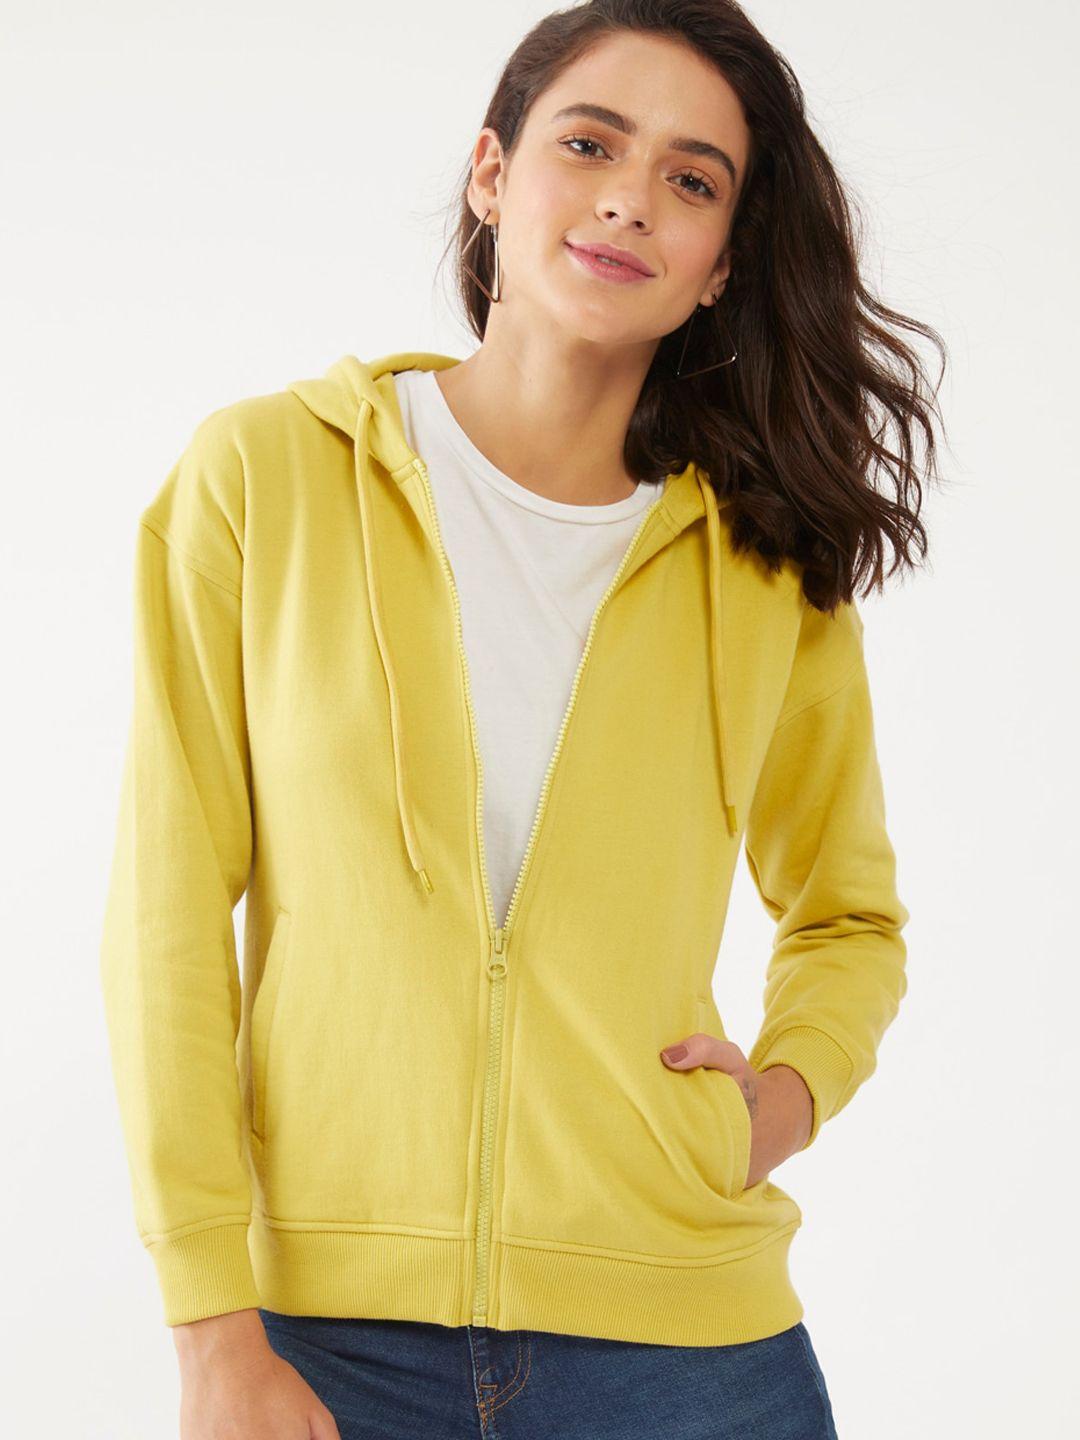 zink london women yellow hooded sweatshirt